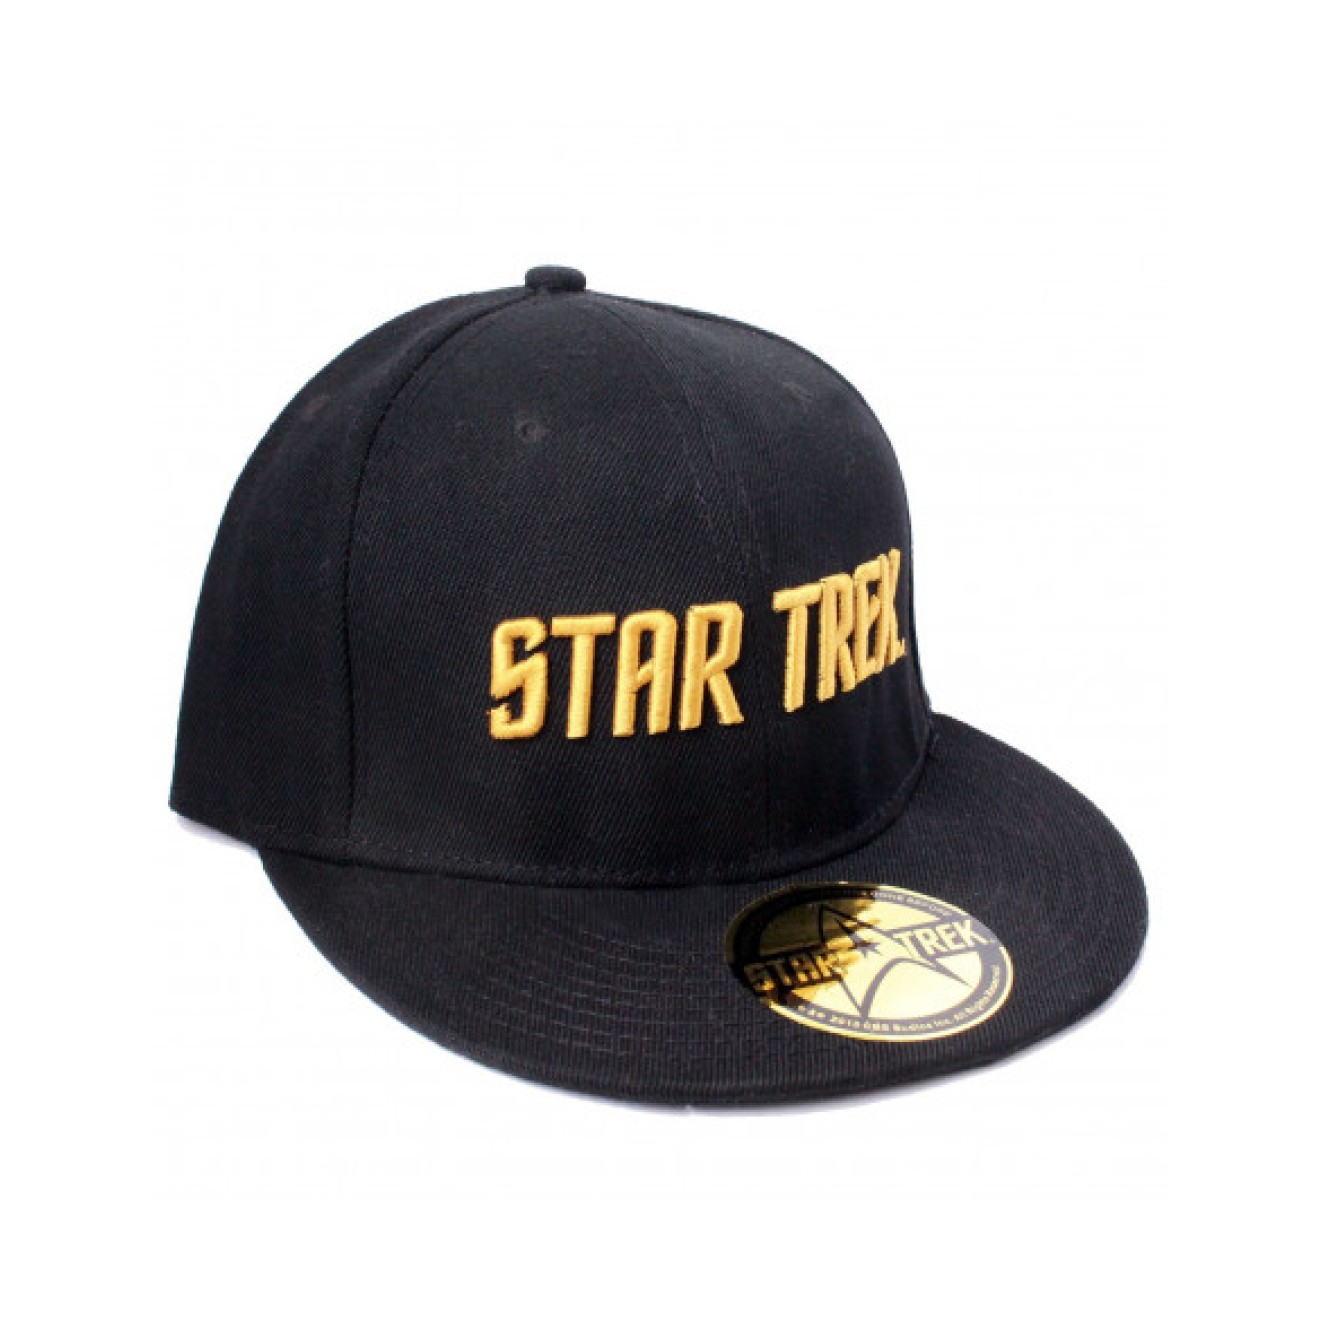 Star Trek Baseball Cap Snapback Cap Mütze hat